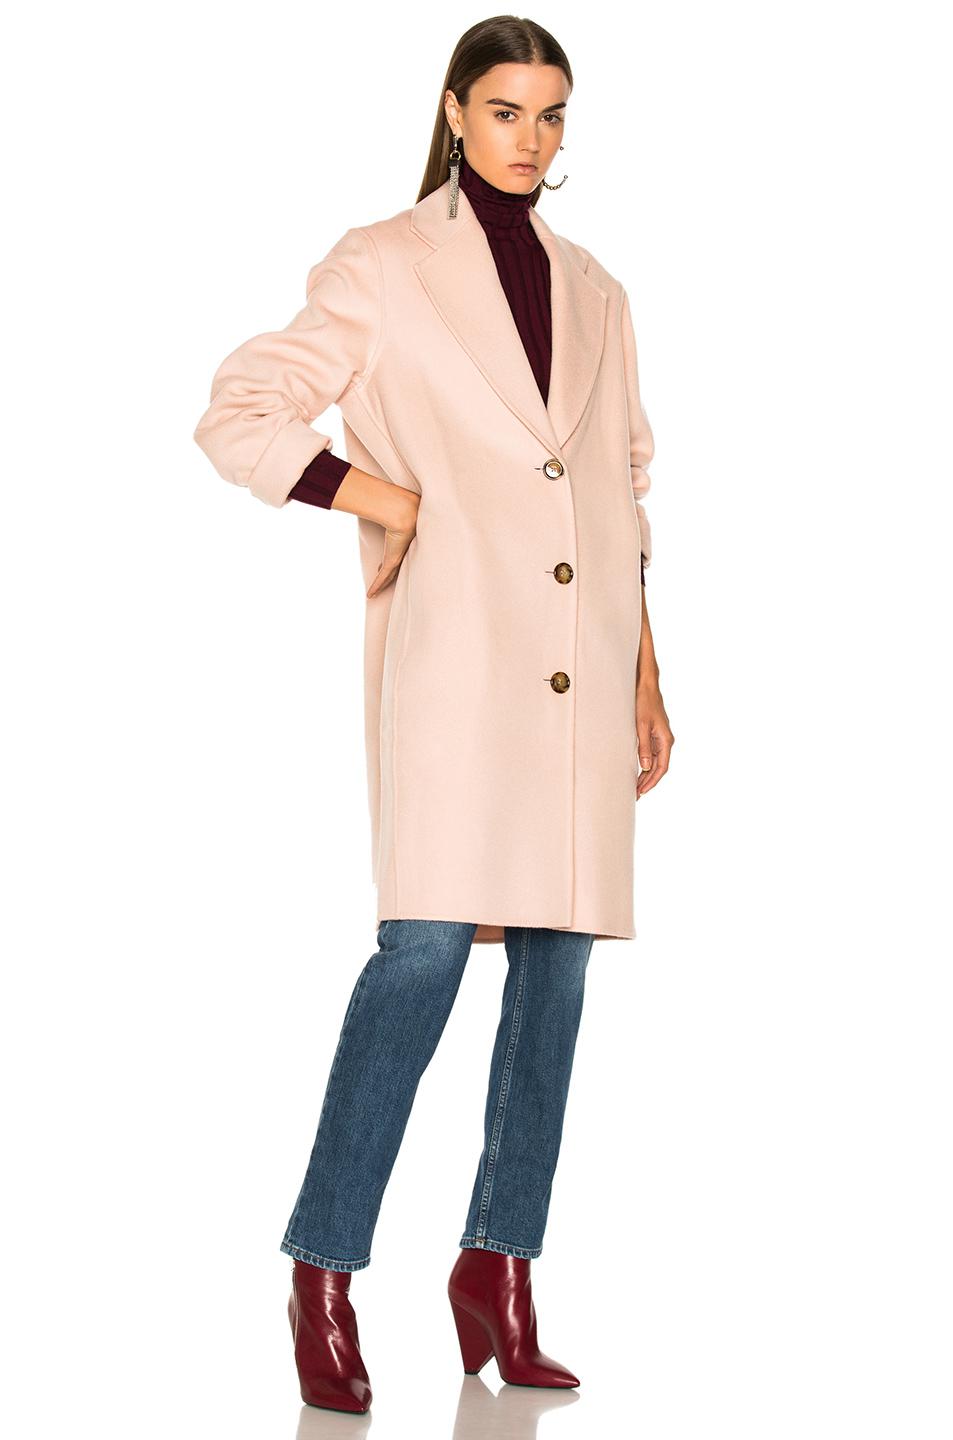 Acne Studios Wool Landi Double Coat in Pale Pink (Pink) - Lyst